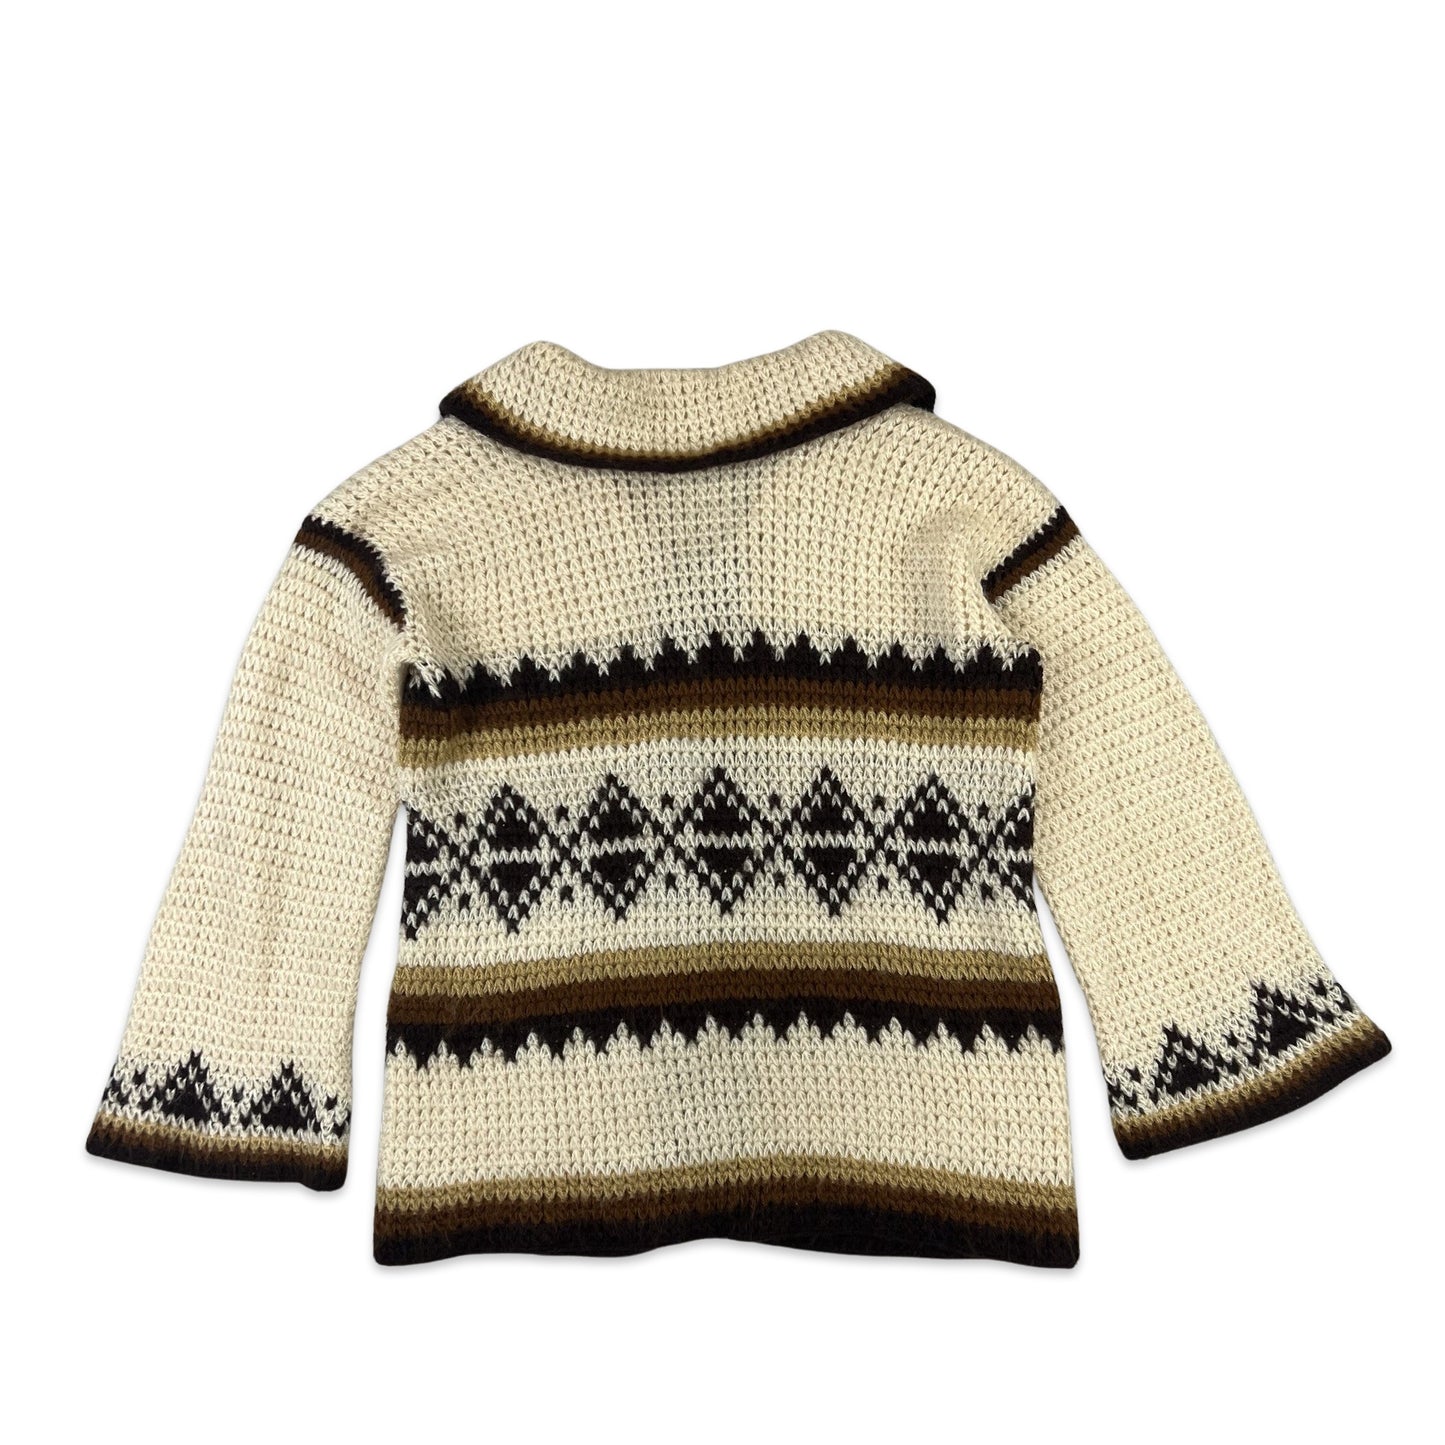 70s Vintage Knit Patterned Cardigan Flared Sleeves Cream Brown 14 16 18